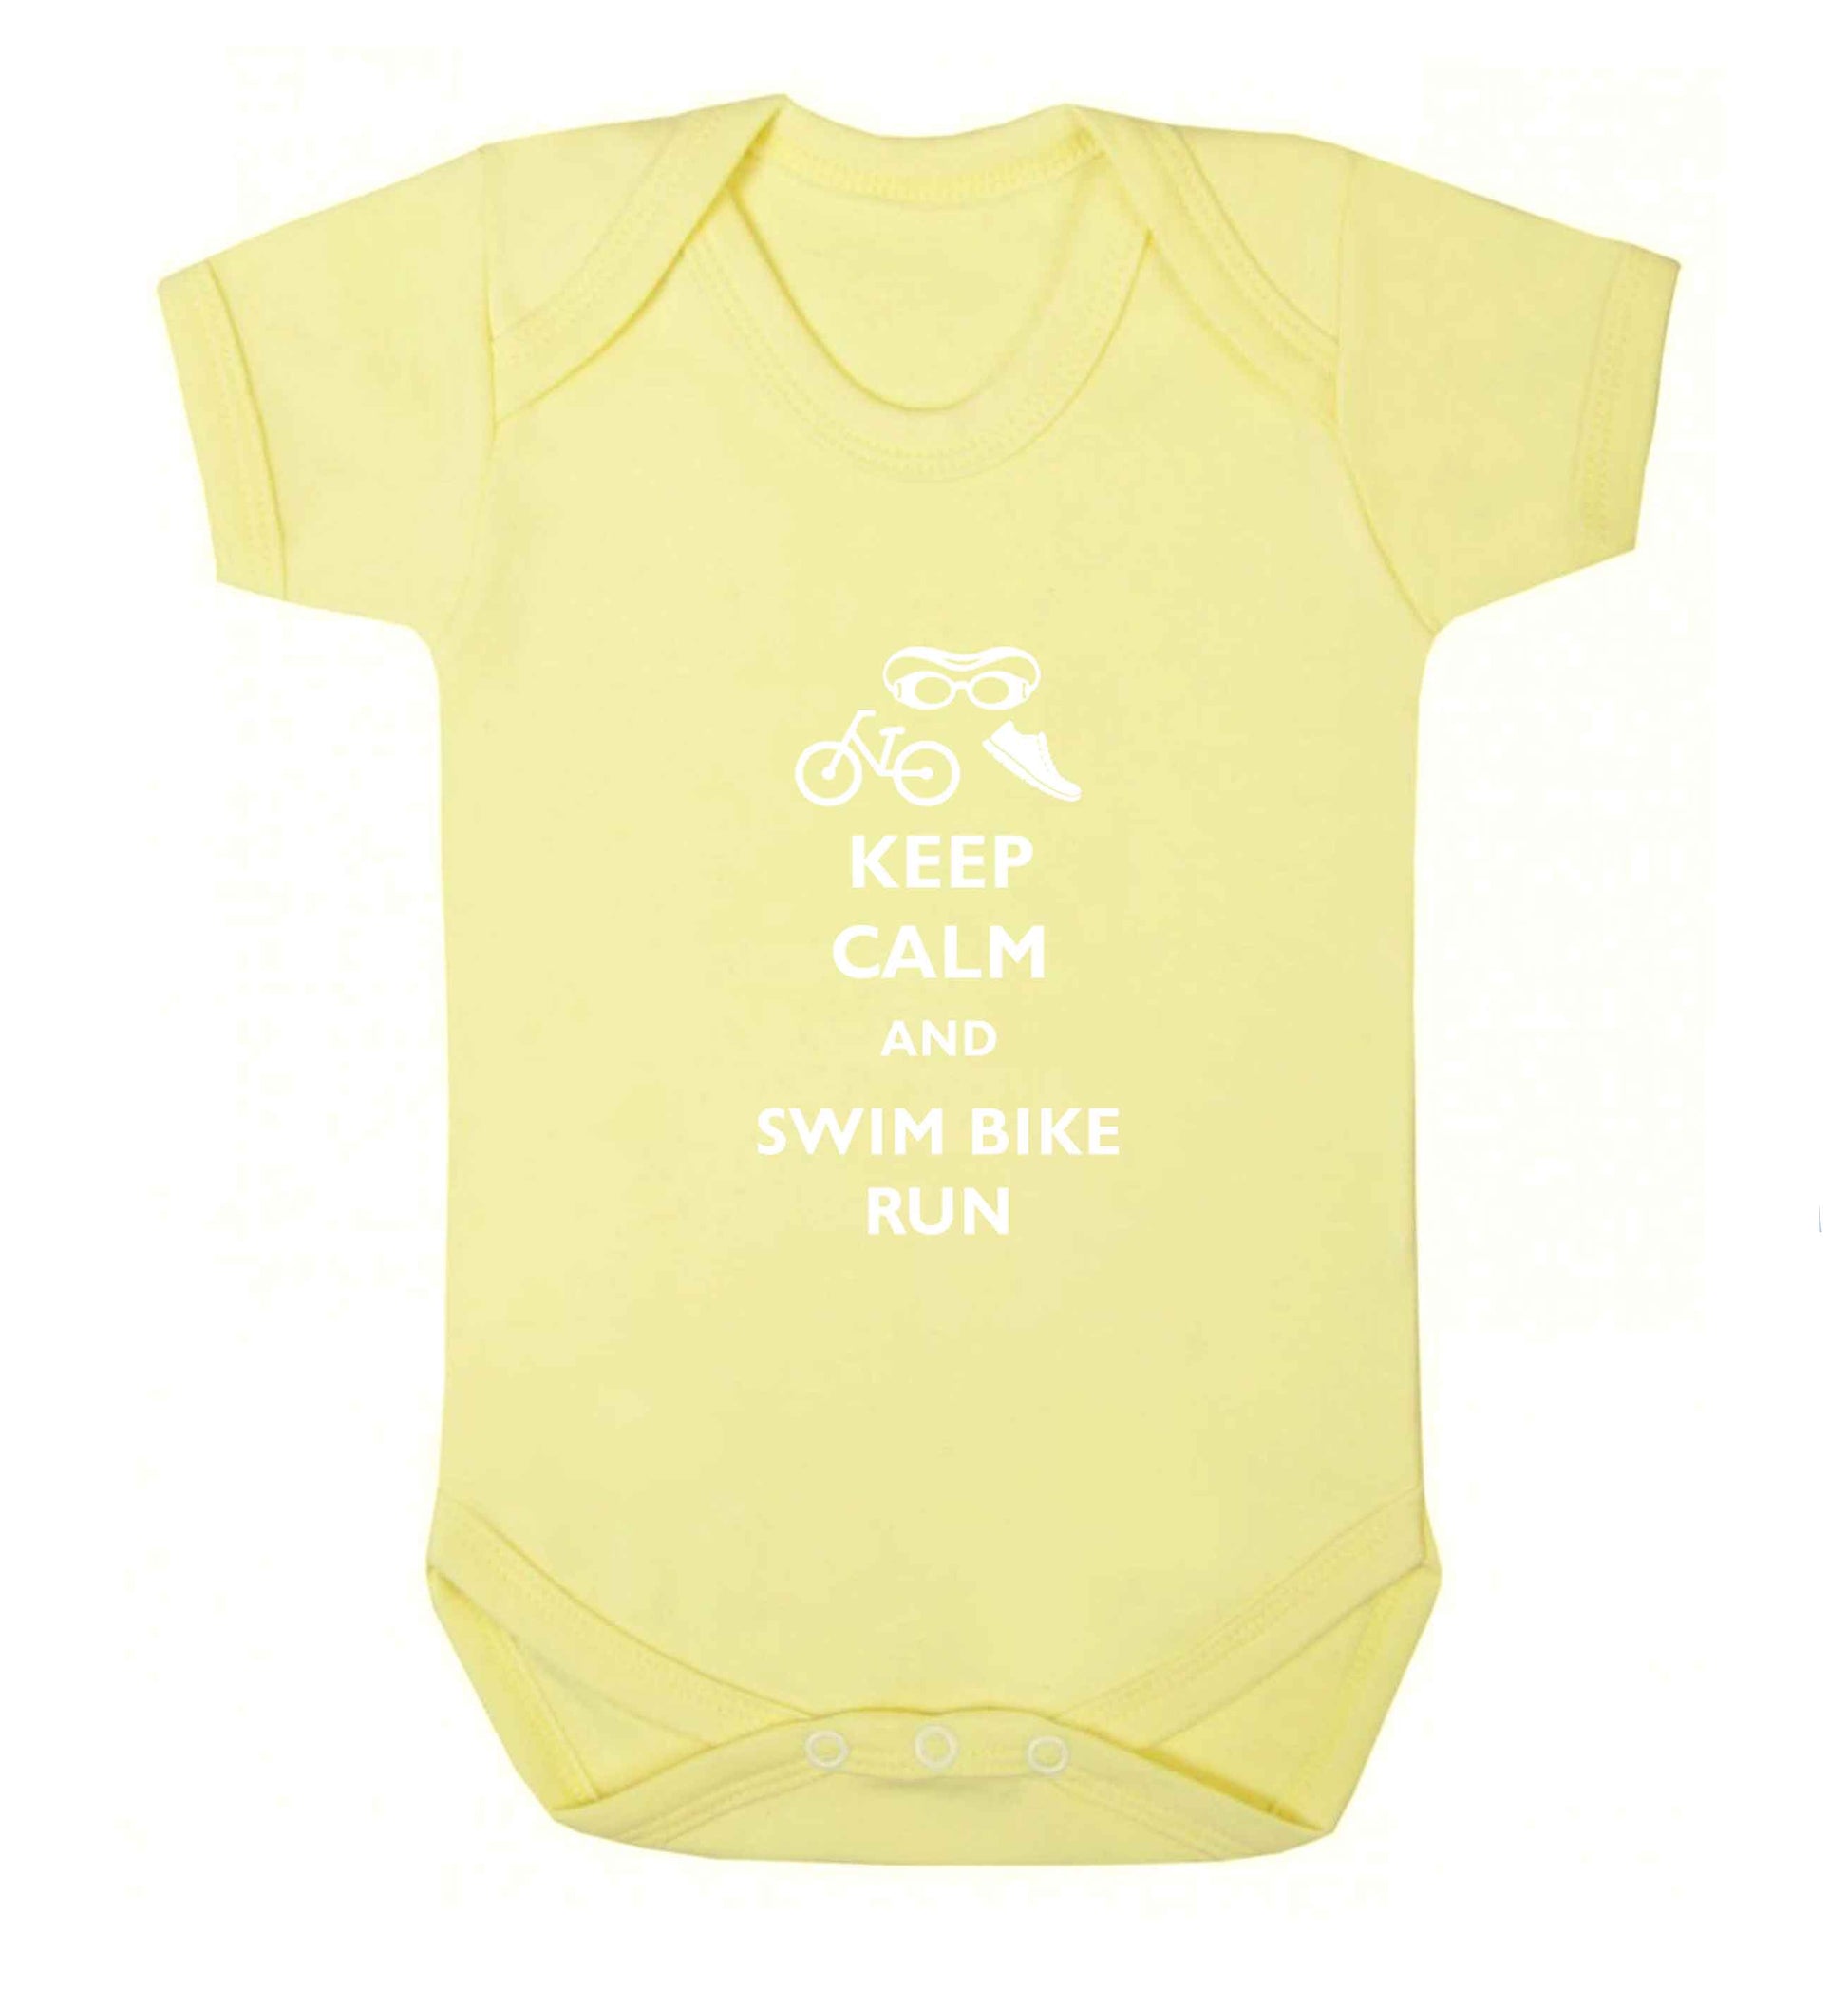 Keep calm and swim bike run baby vest pale yellow 18-24 months